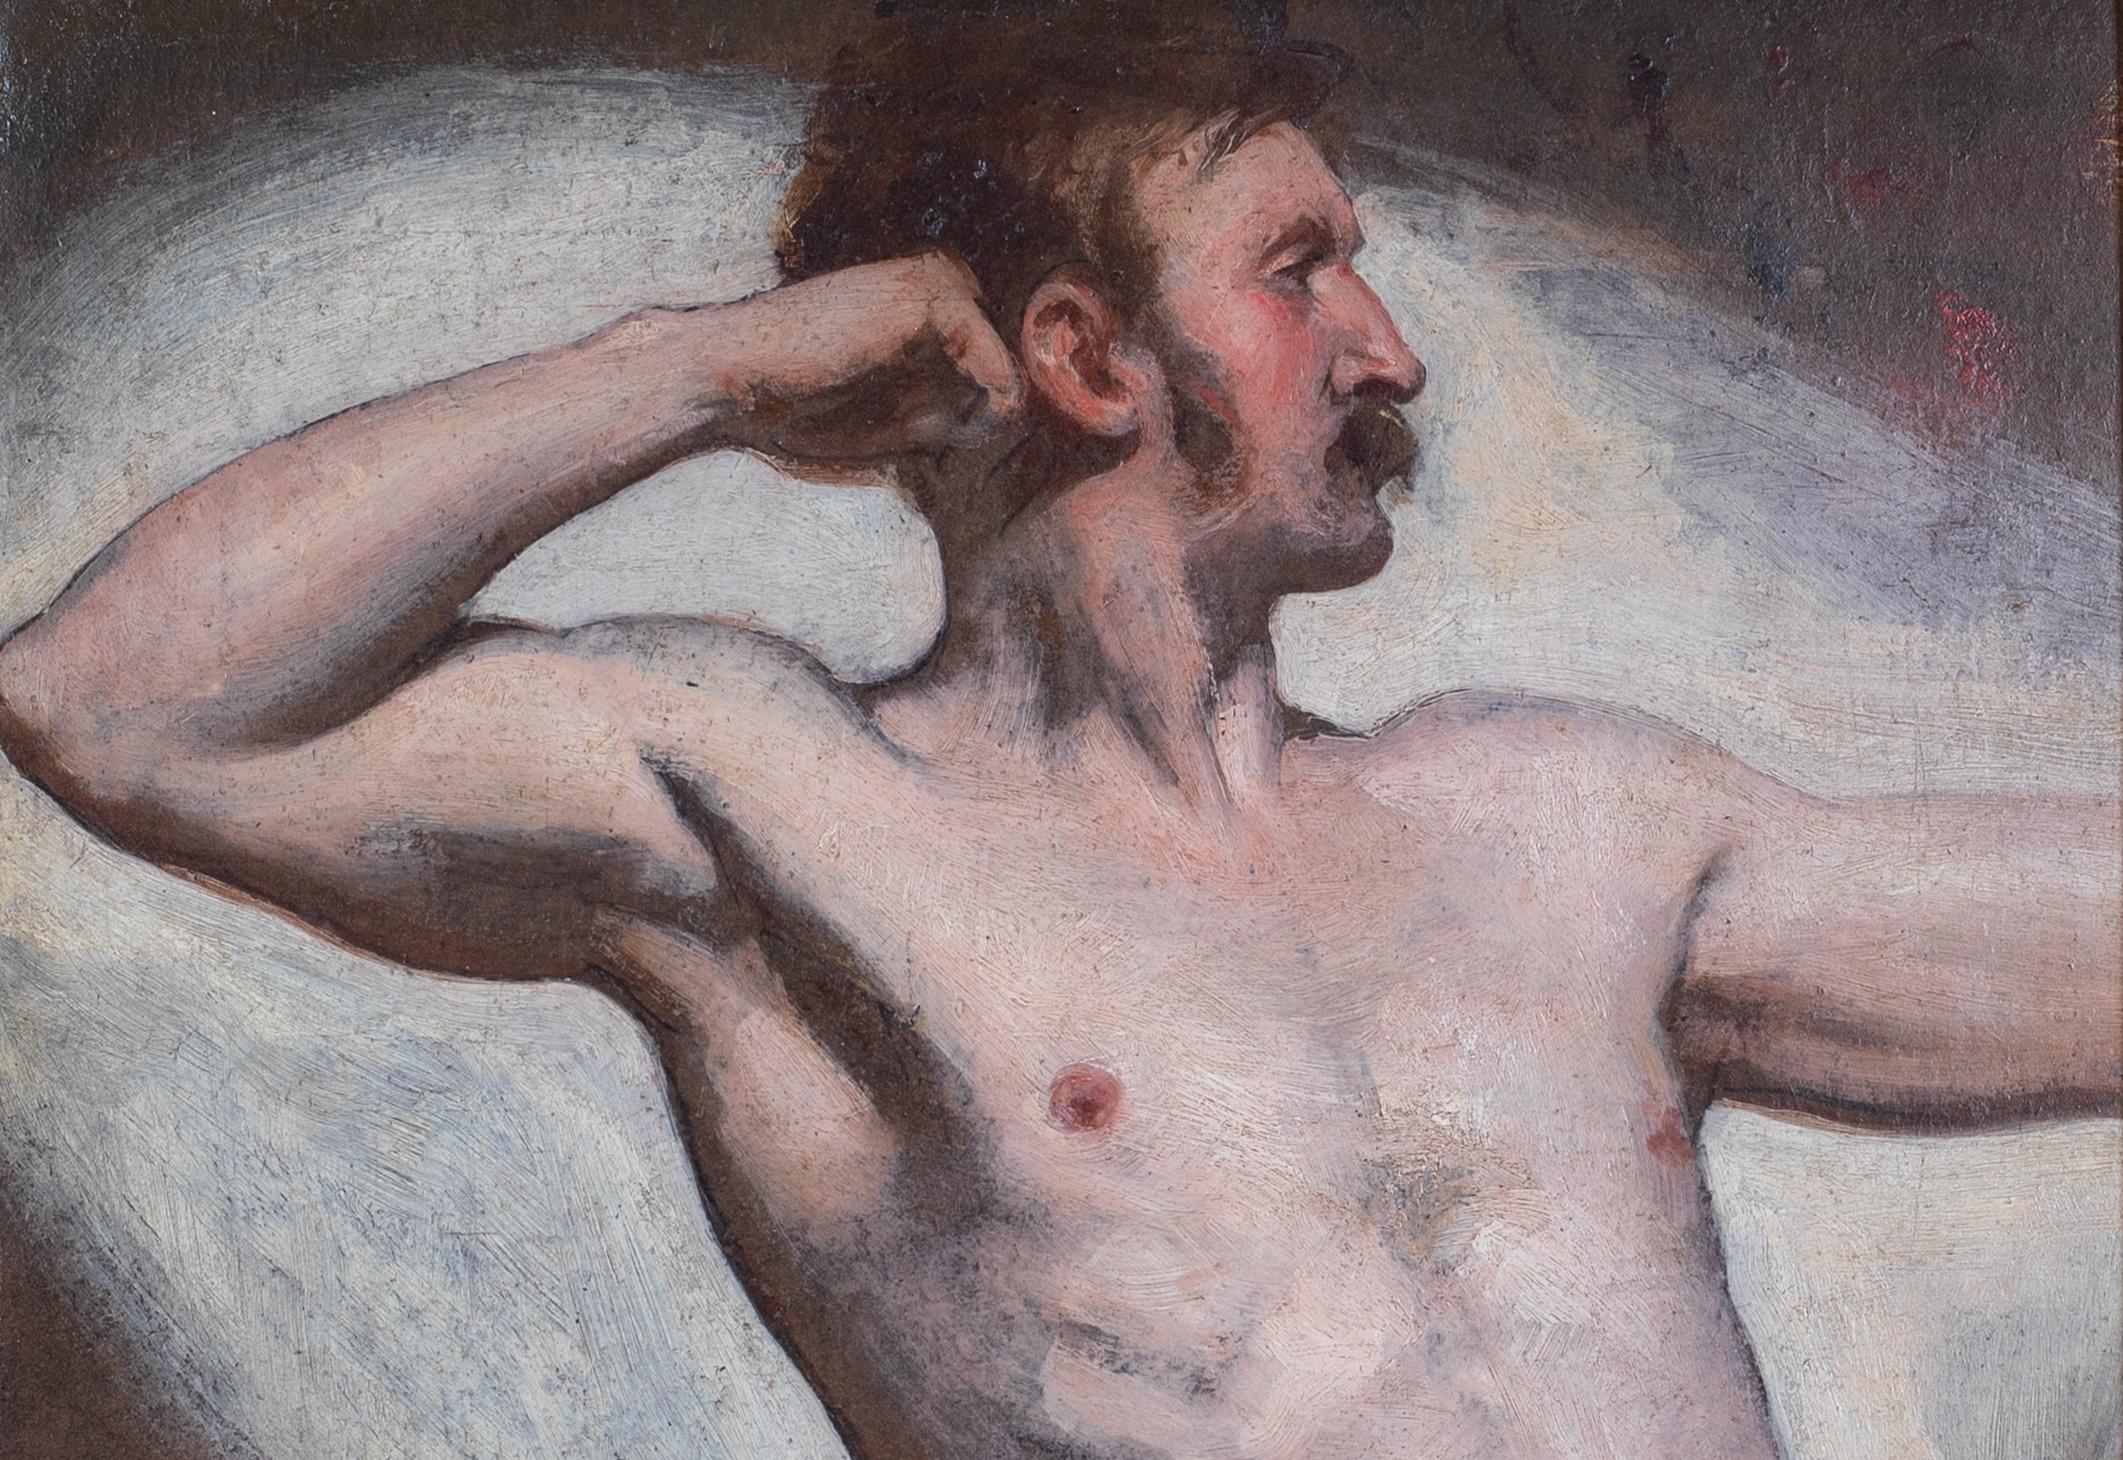 Nude Male Posing As An Archer, 19th Century  Daniel MACLISE (1806-1870) 2